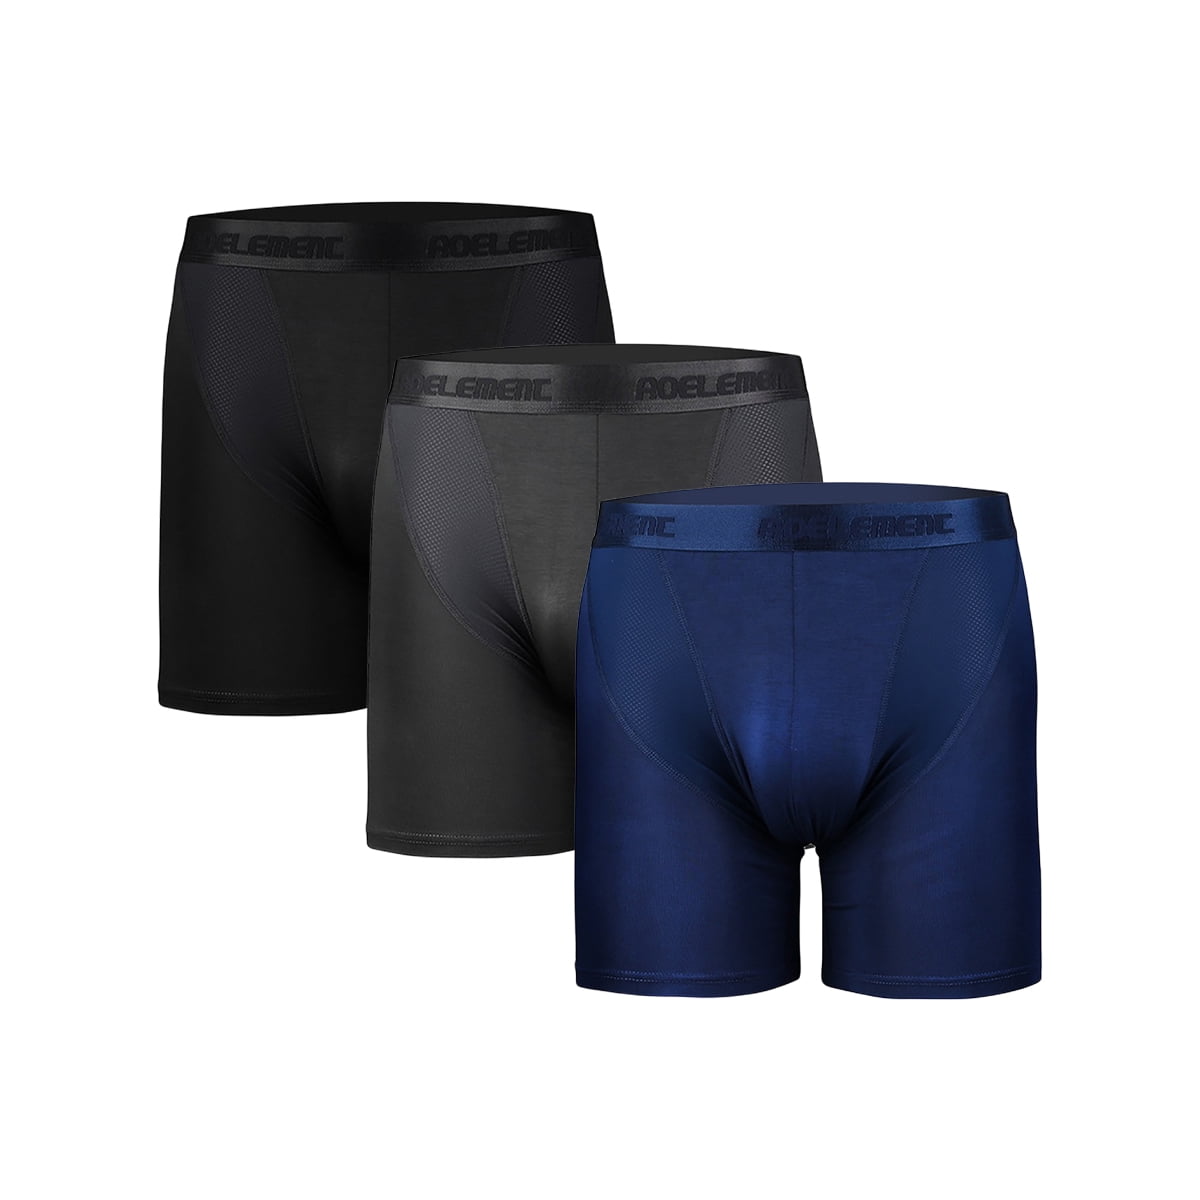 3 Pack Men's Ice Silk Underwear Breathable Soft Ultra-Thin Mesh Boxer Briefs